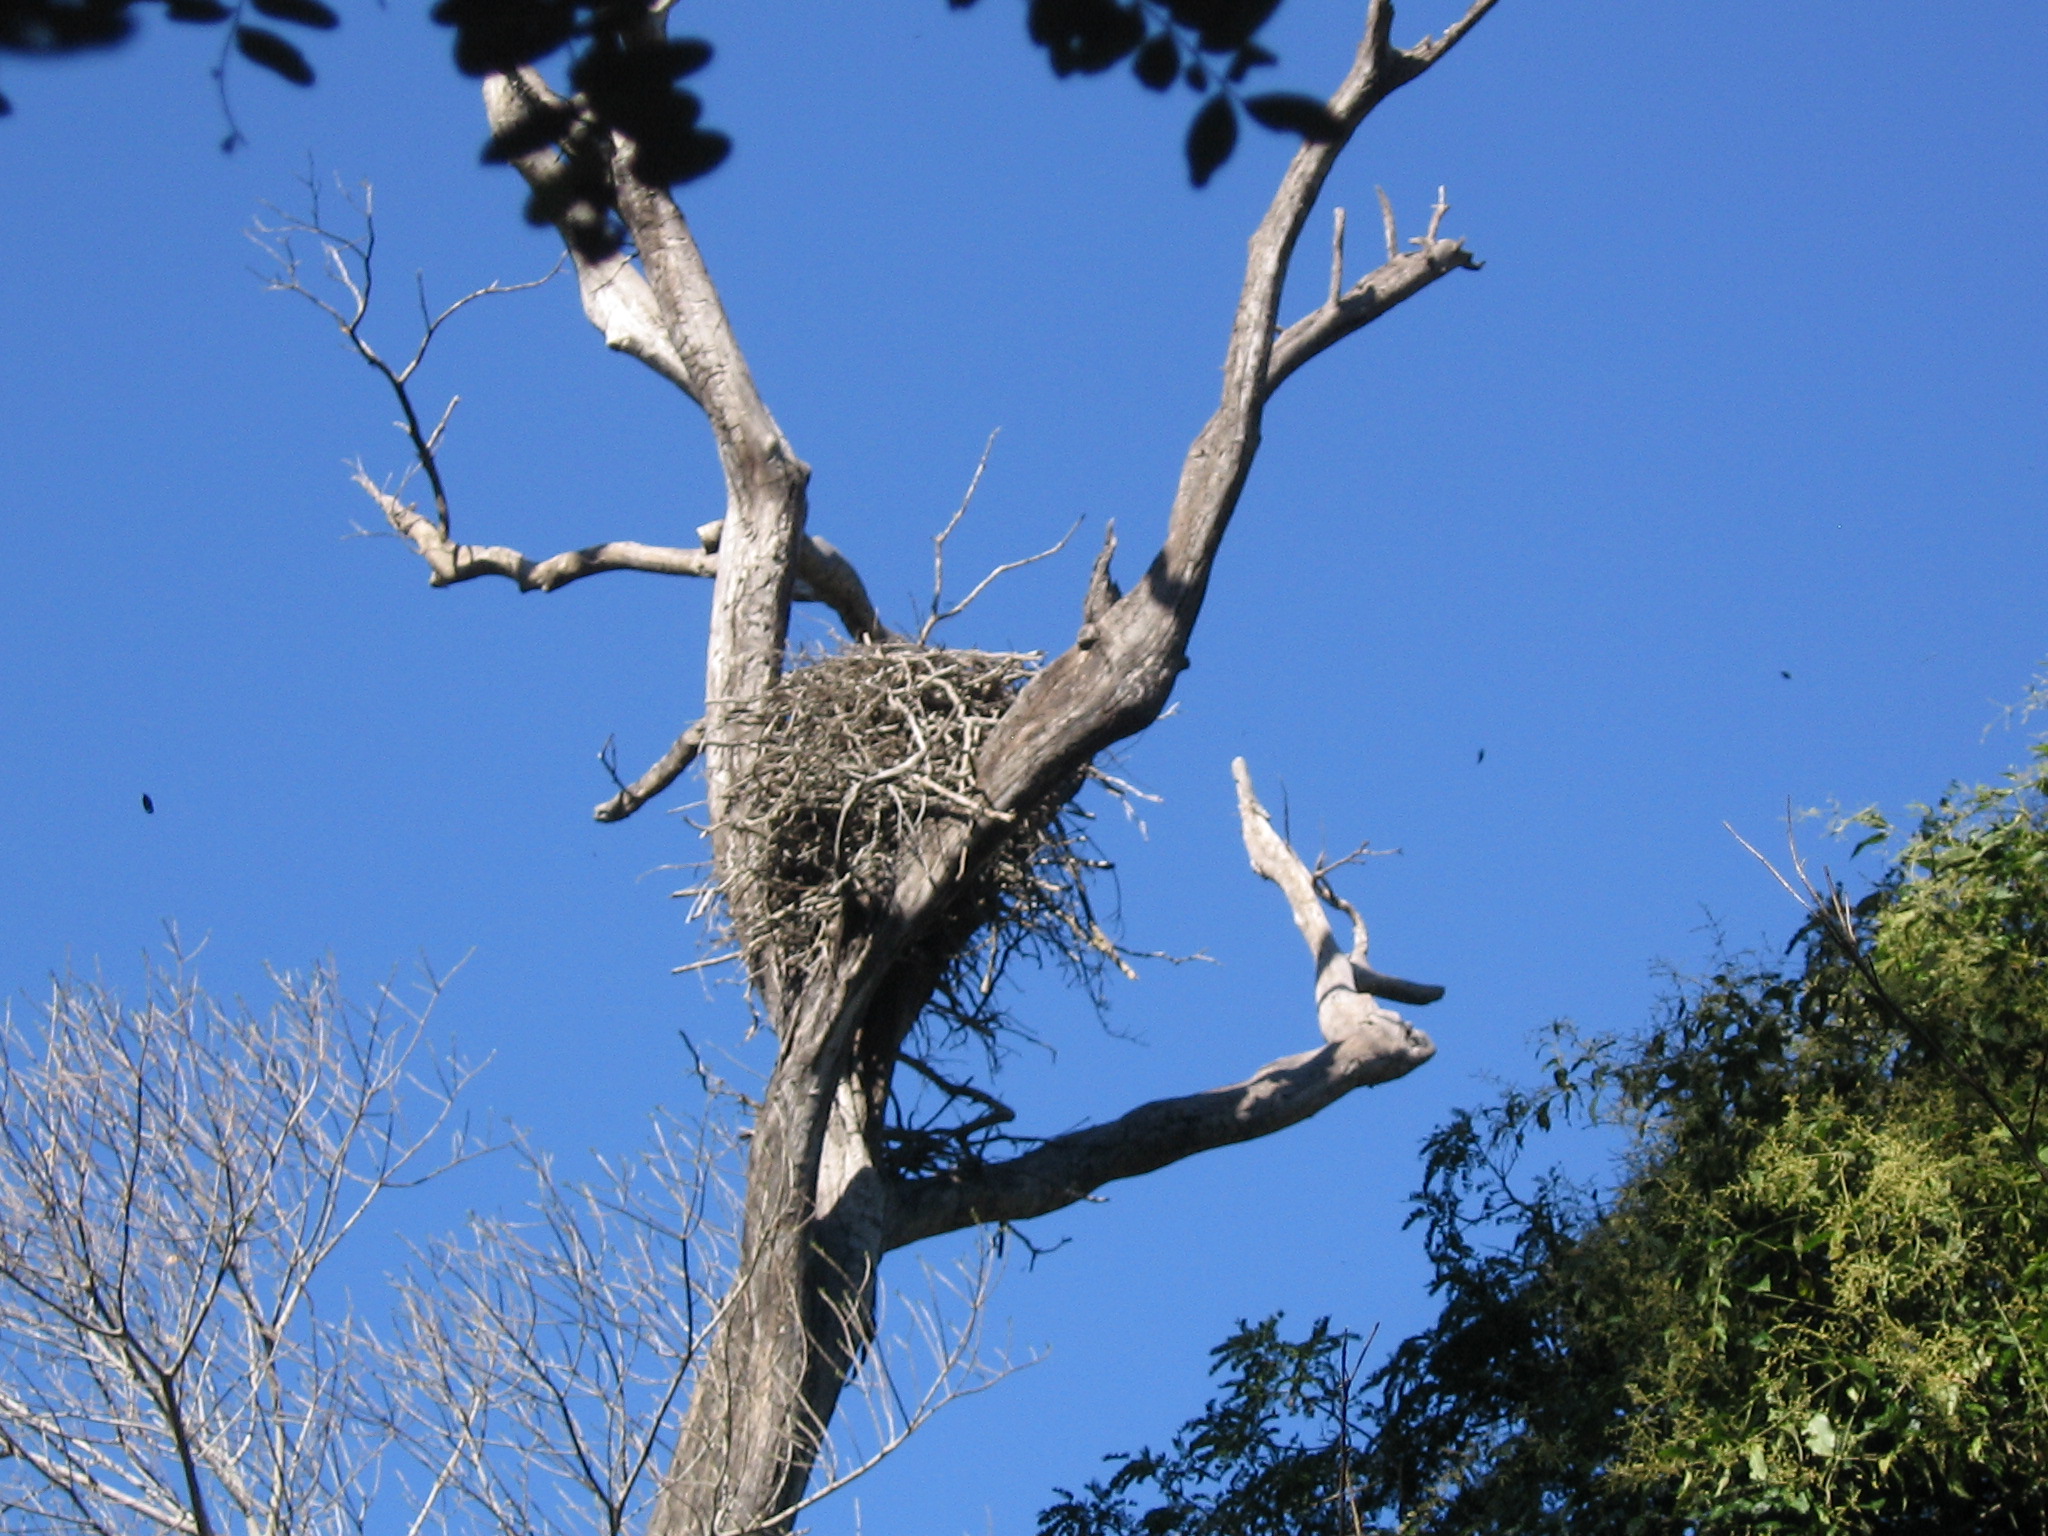 Harpy Eagle nest. Photo taken by David Morimoto, published on Flickr